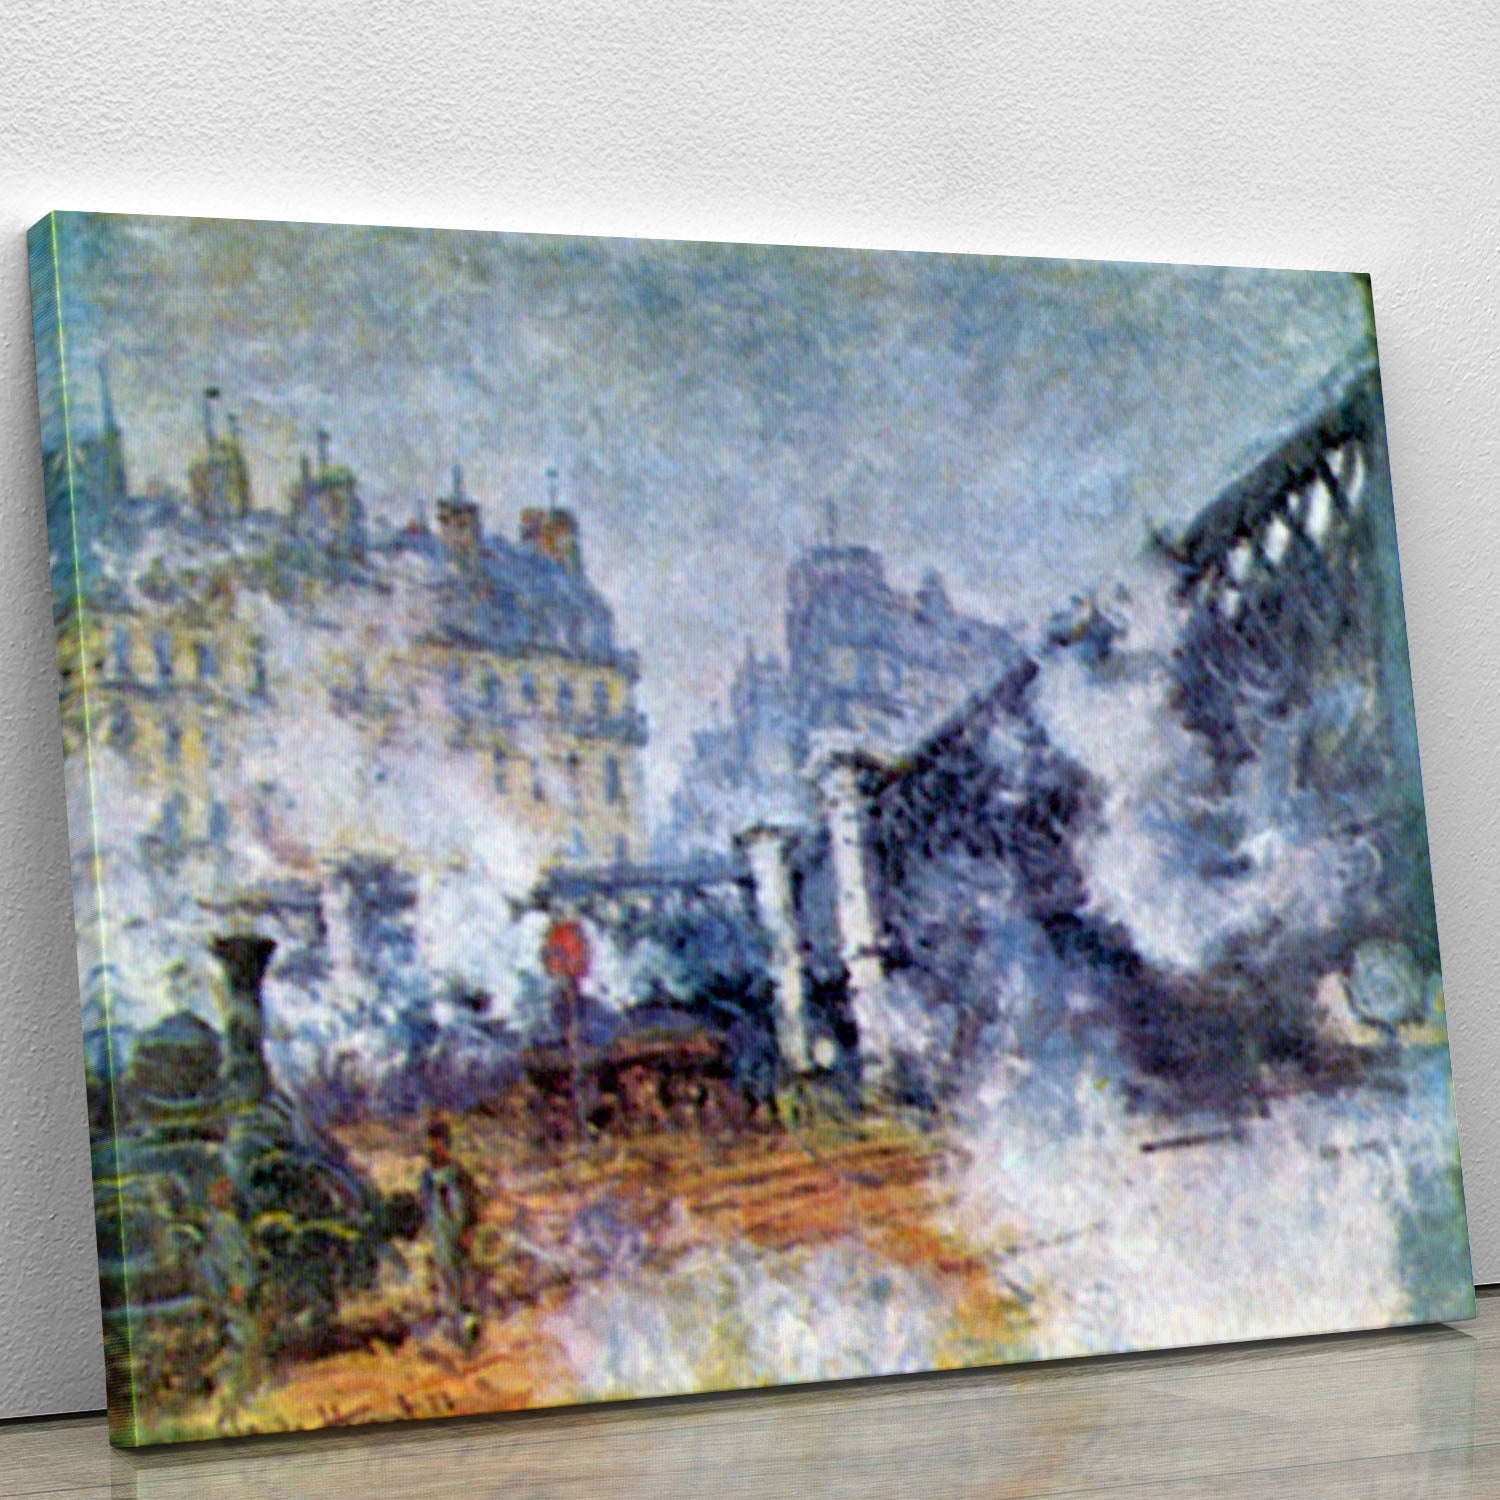 The Europe Bridge Saint Lazare station in Paris by Monet Canvas Print or Poster - Canvas Art Rocks - 1